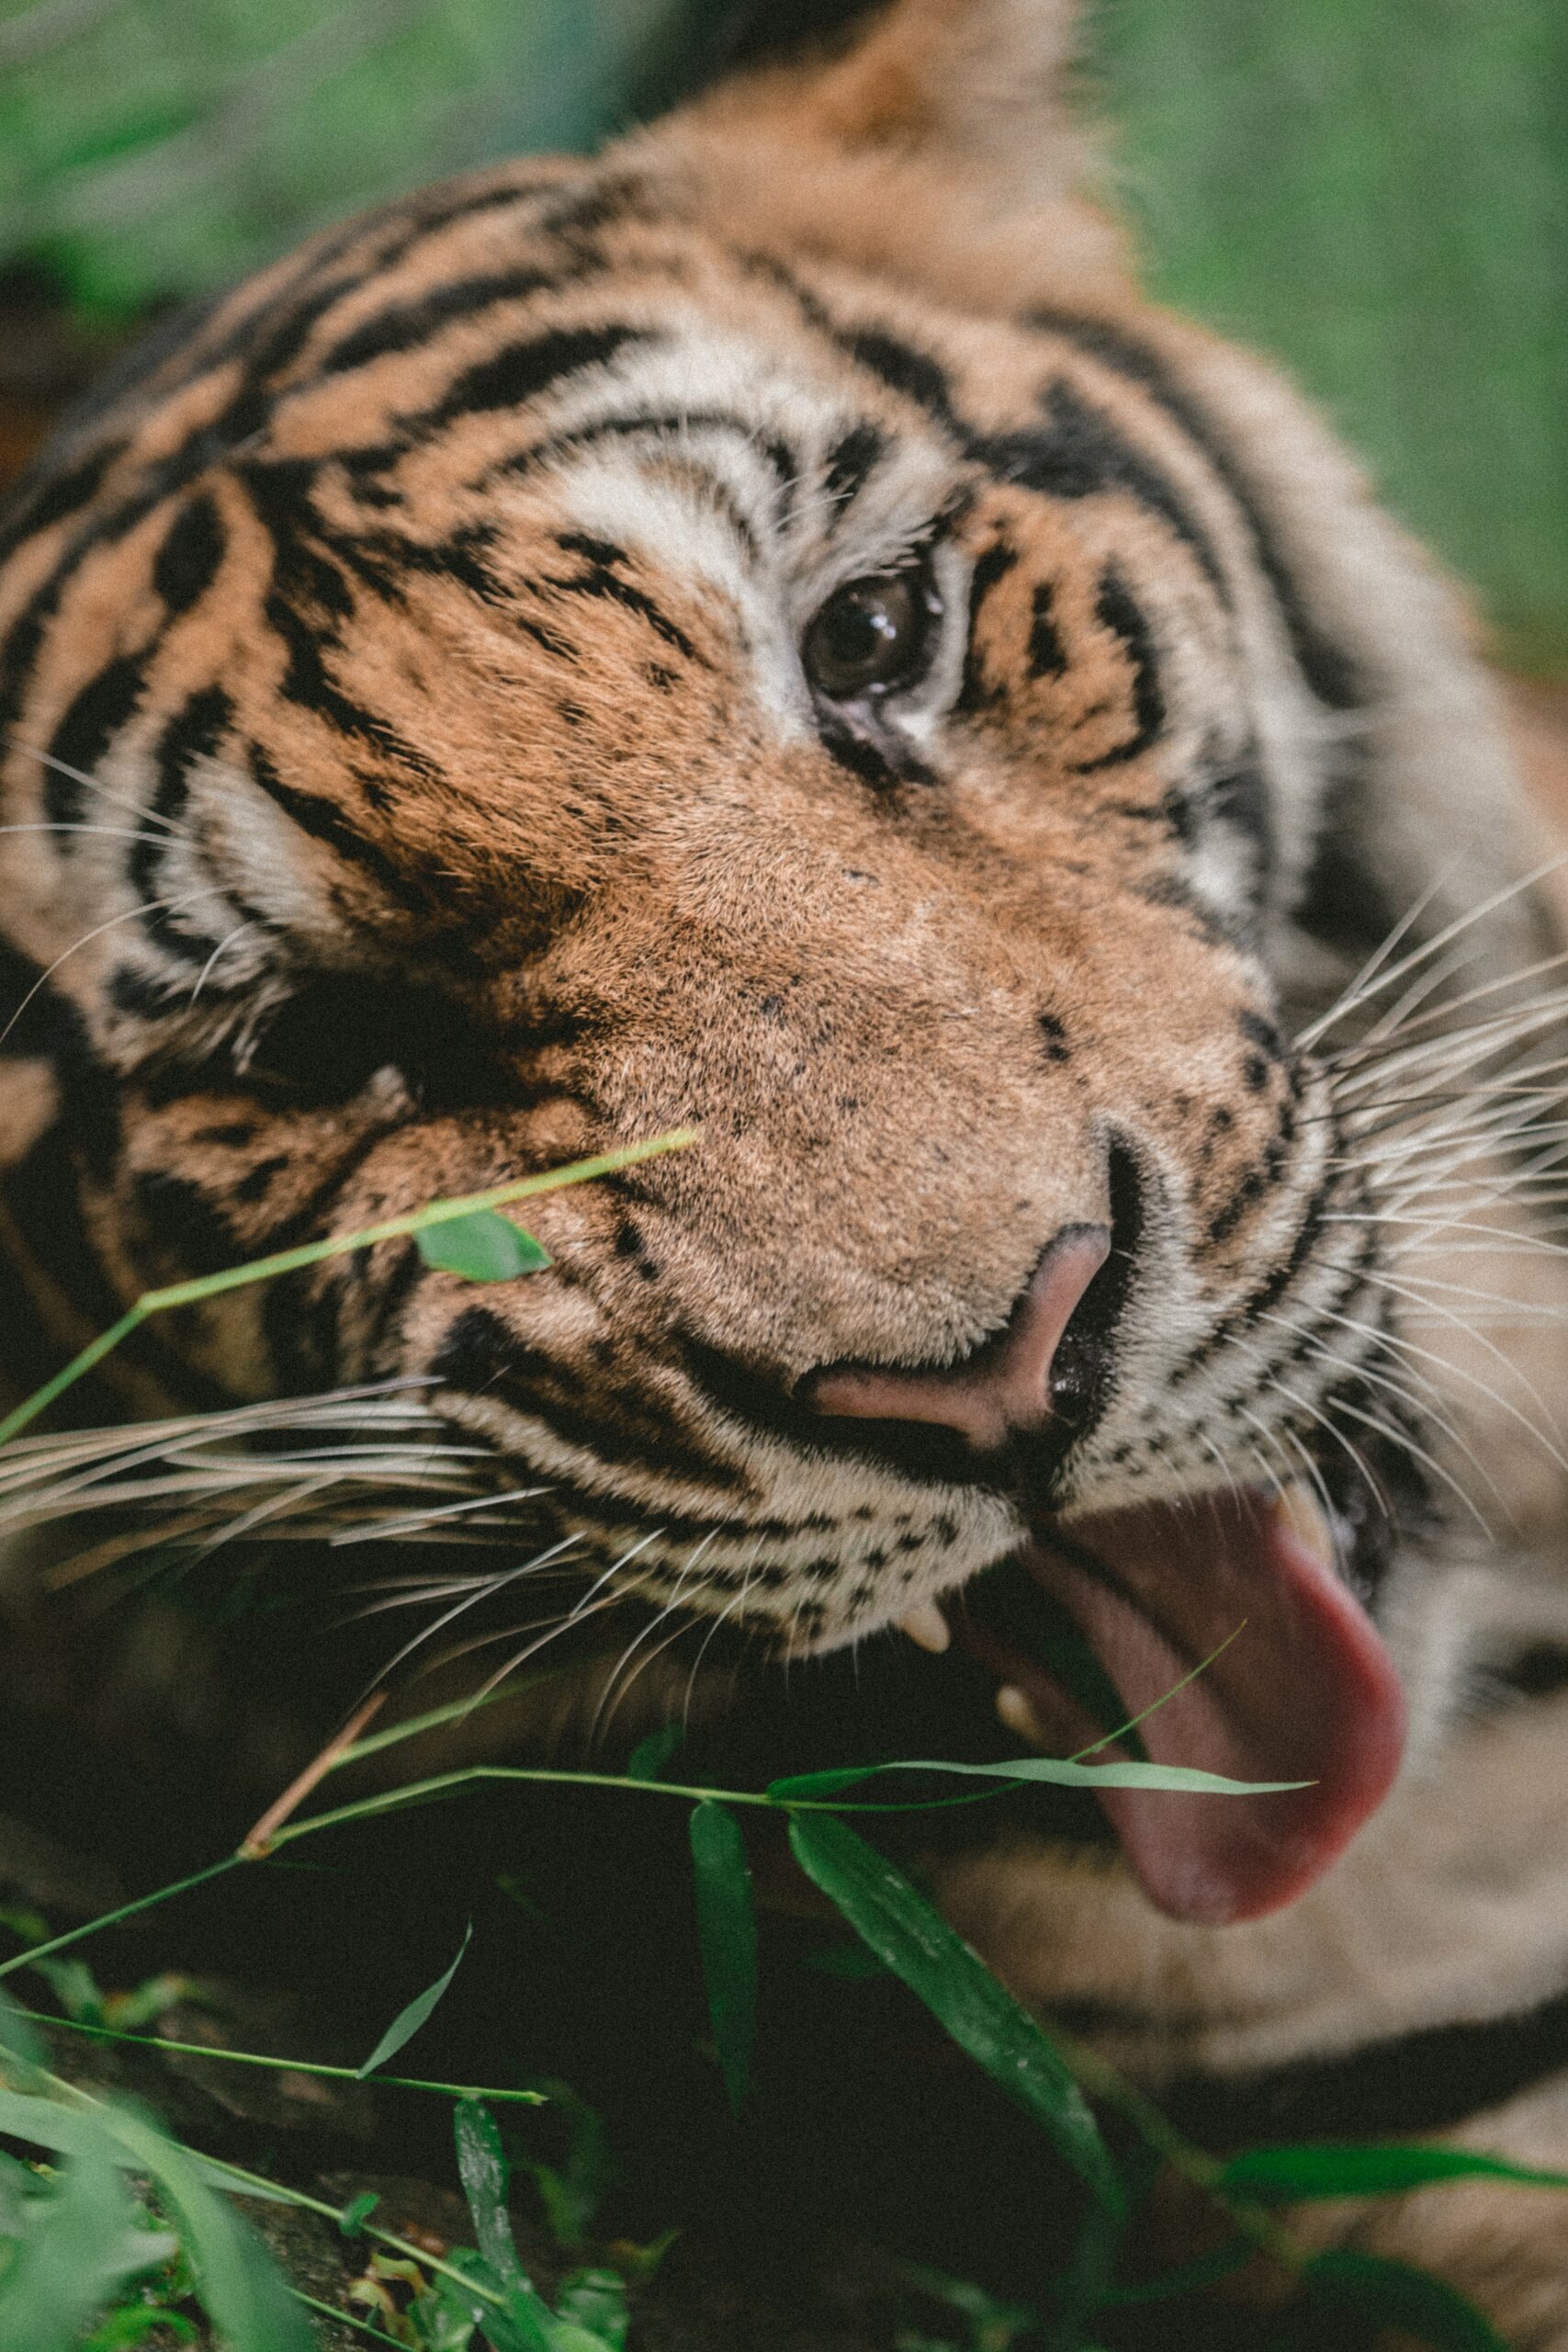 Yawning tiger. Photo by Jakob Owens.